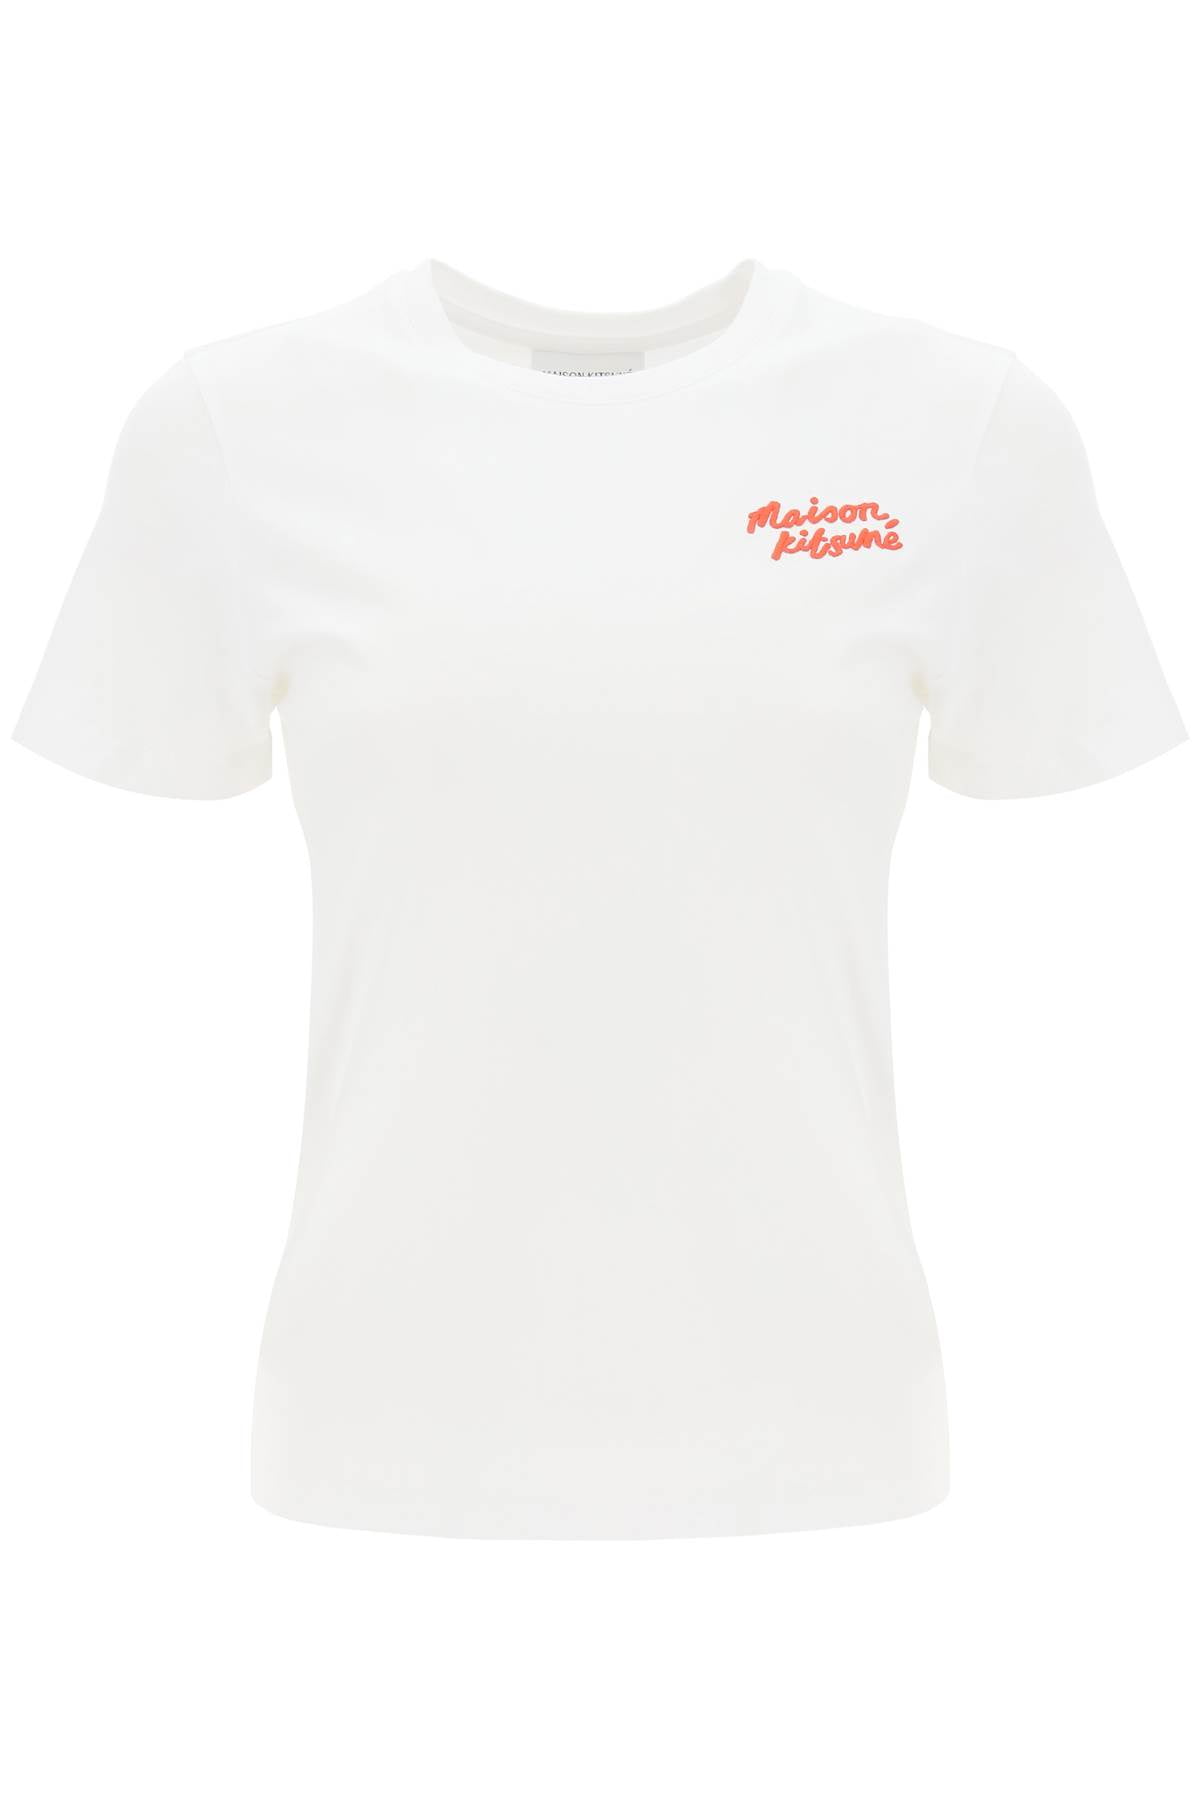 Maison Kitsune T-Shirt With Logo Embroidery Women - Walmart.com